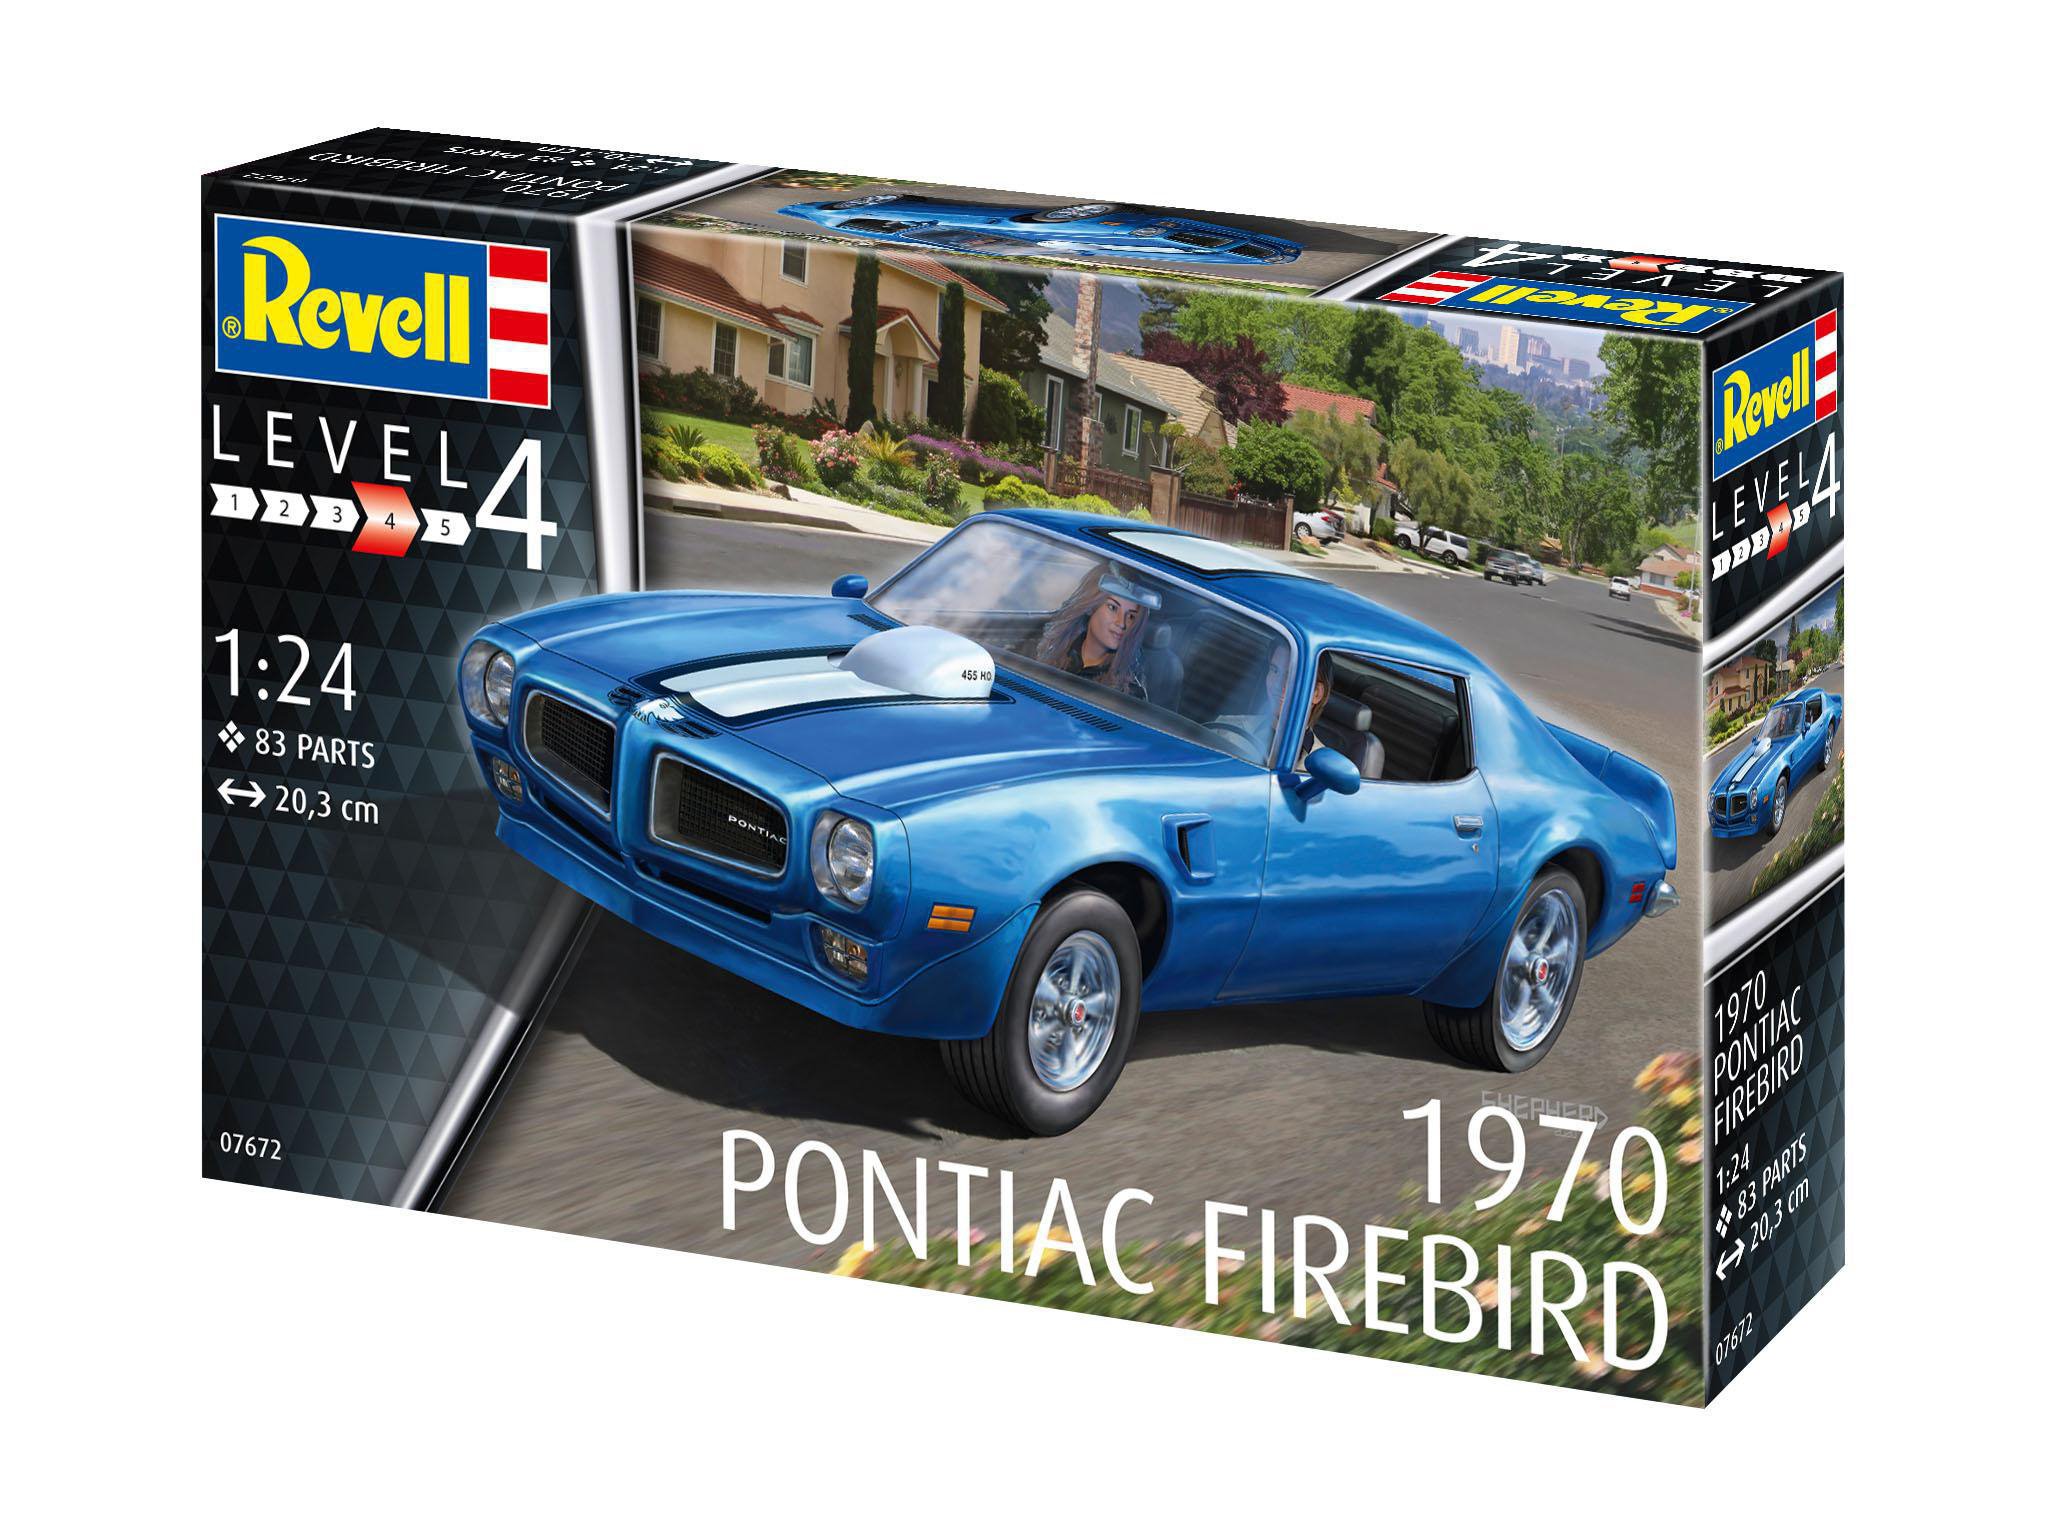 REVELL 1970 Firebird Pontiac Mehrfarbig Modellbausatz